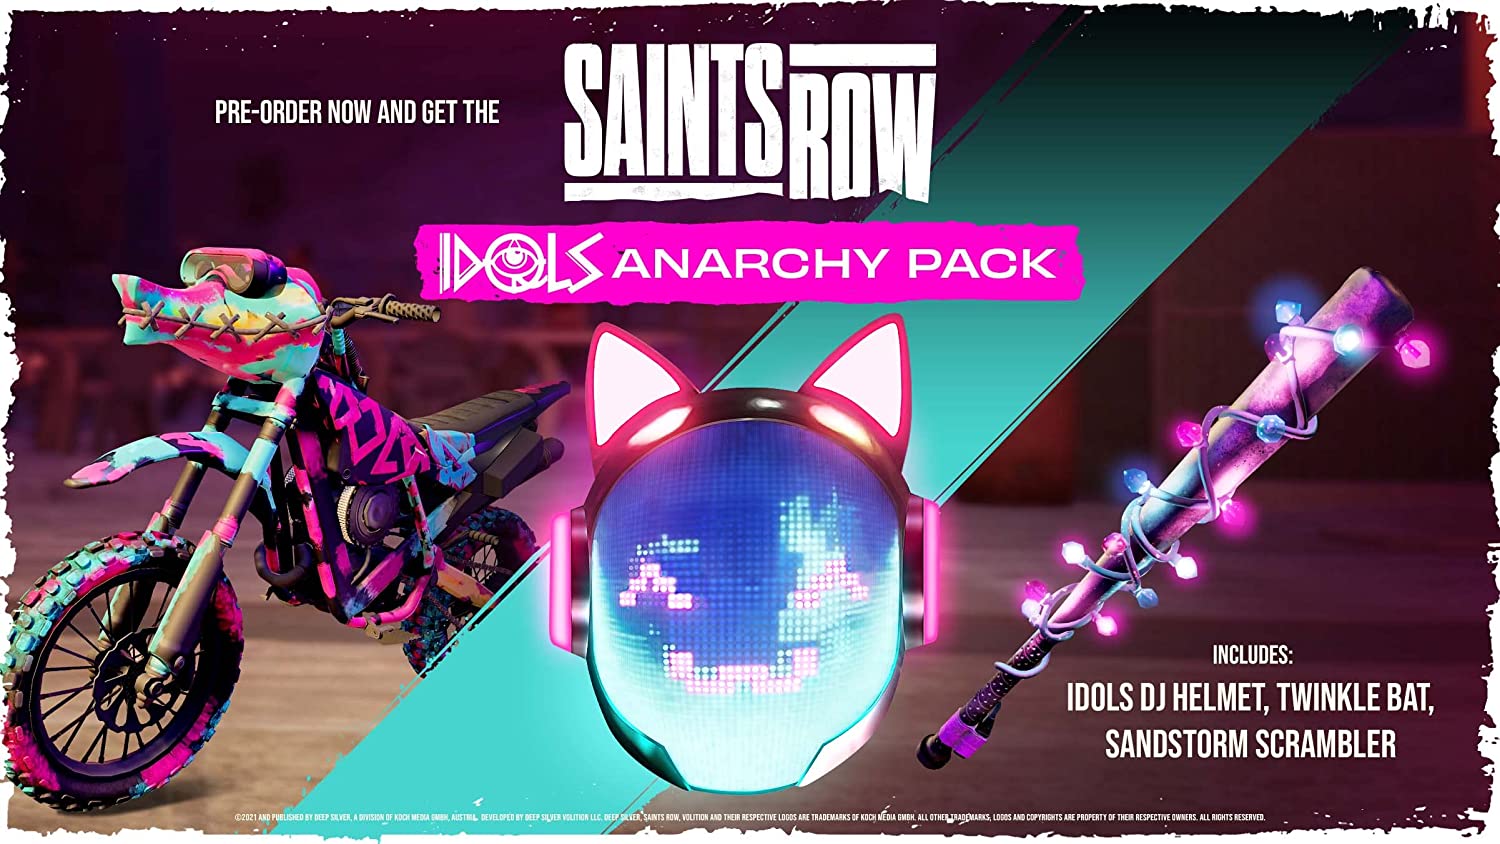 Saints Row Criminal Custom Edition GameStop Exclusive   Exclusive - King Gaming 